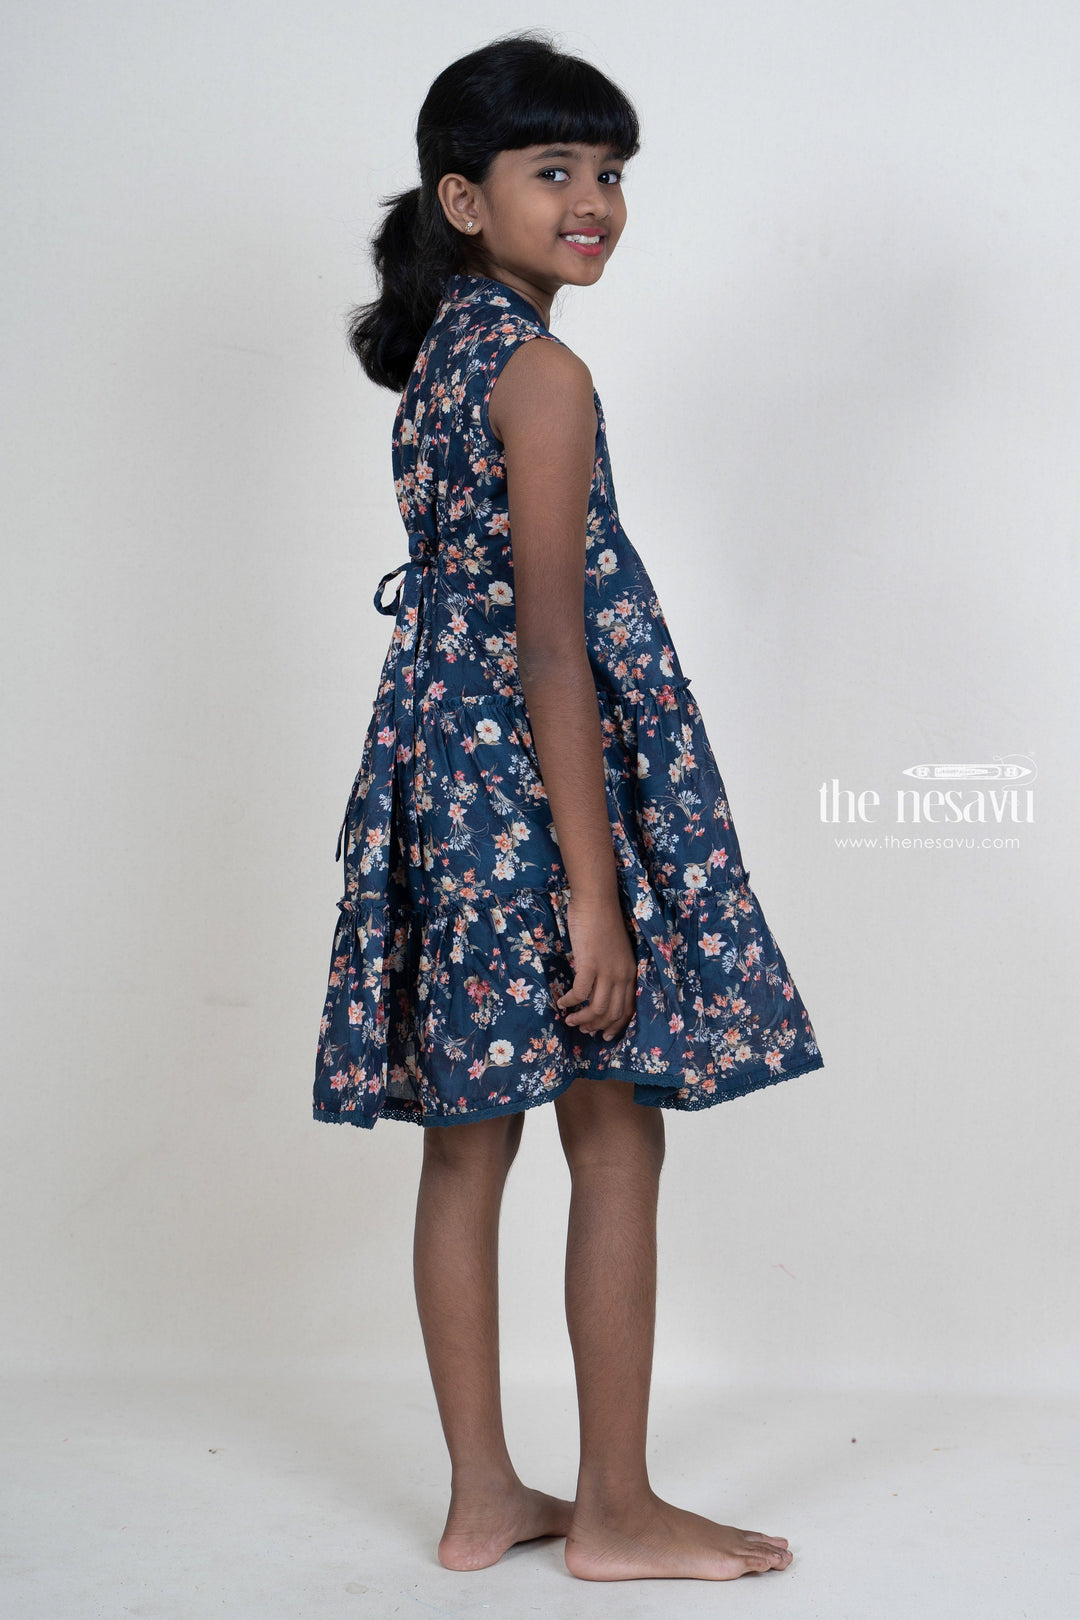 The Nesavu Frocks & Dresses Midnight Blue Floral Designer Collared Frock With Neck Tie For Girls psr silks Nesavu